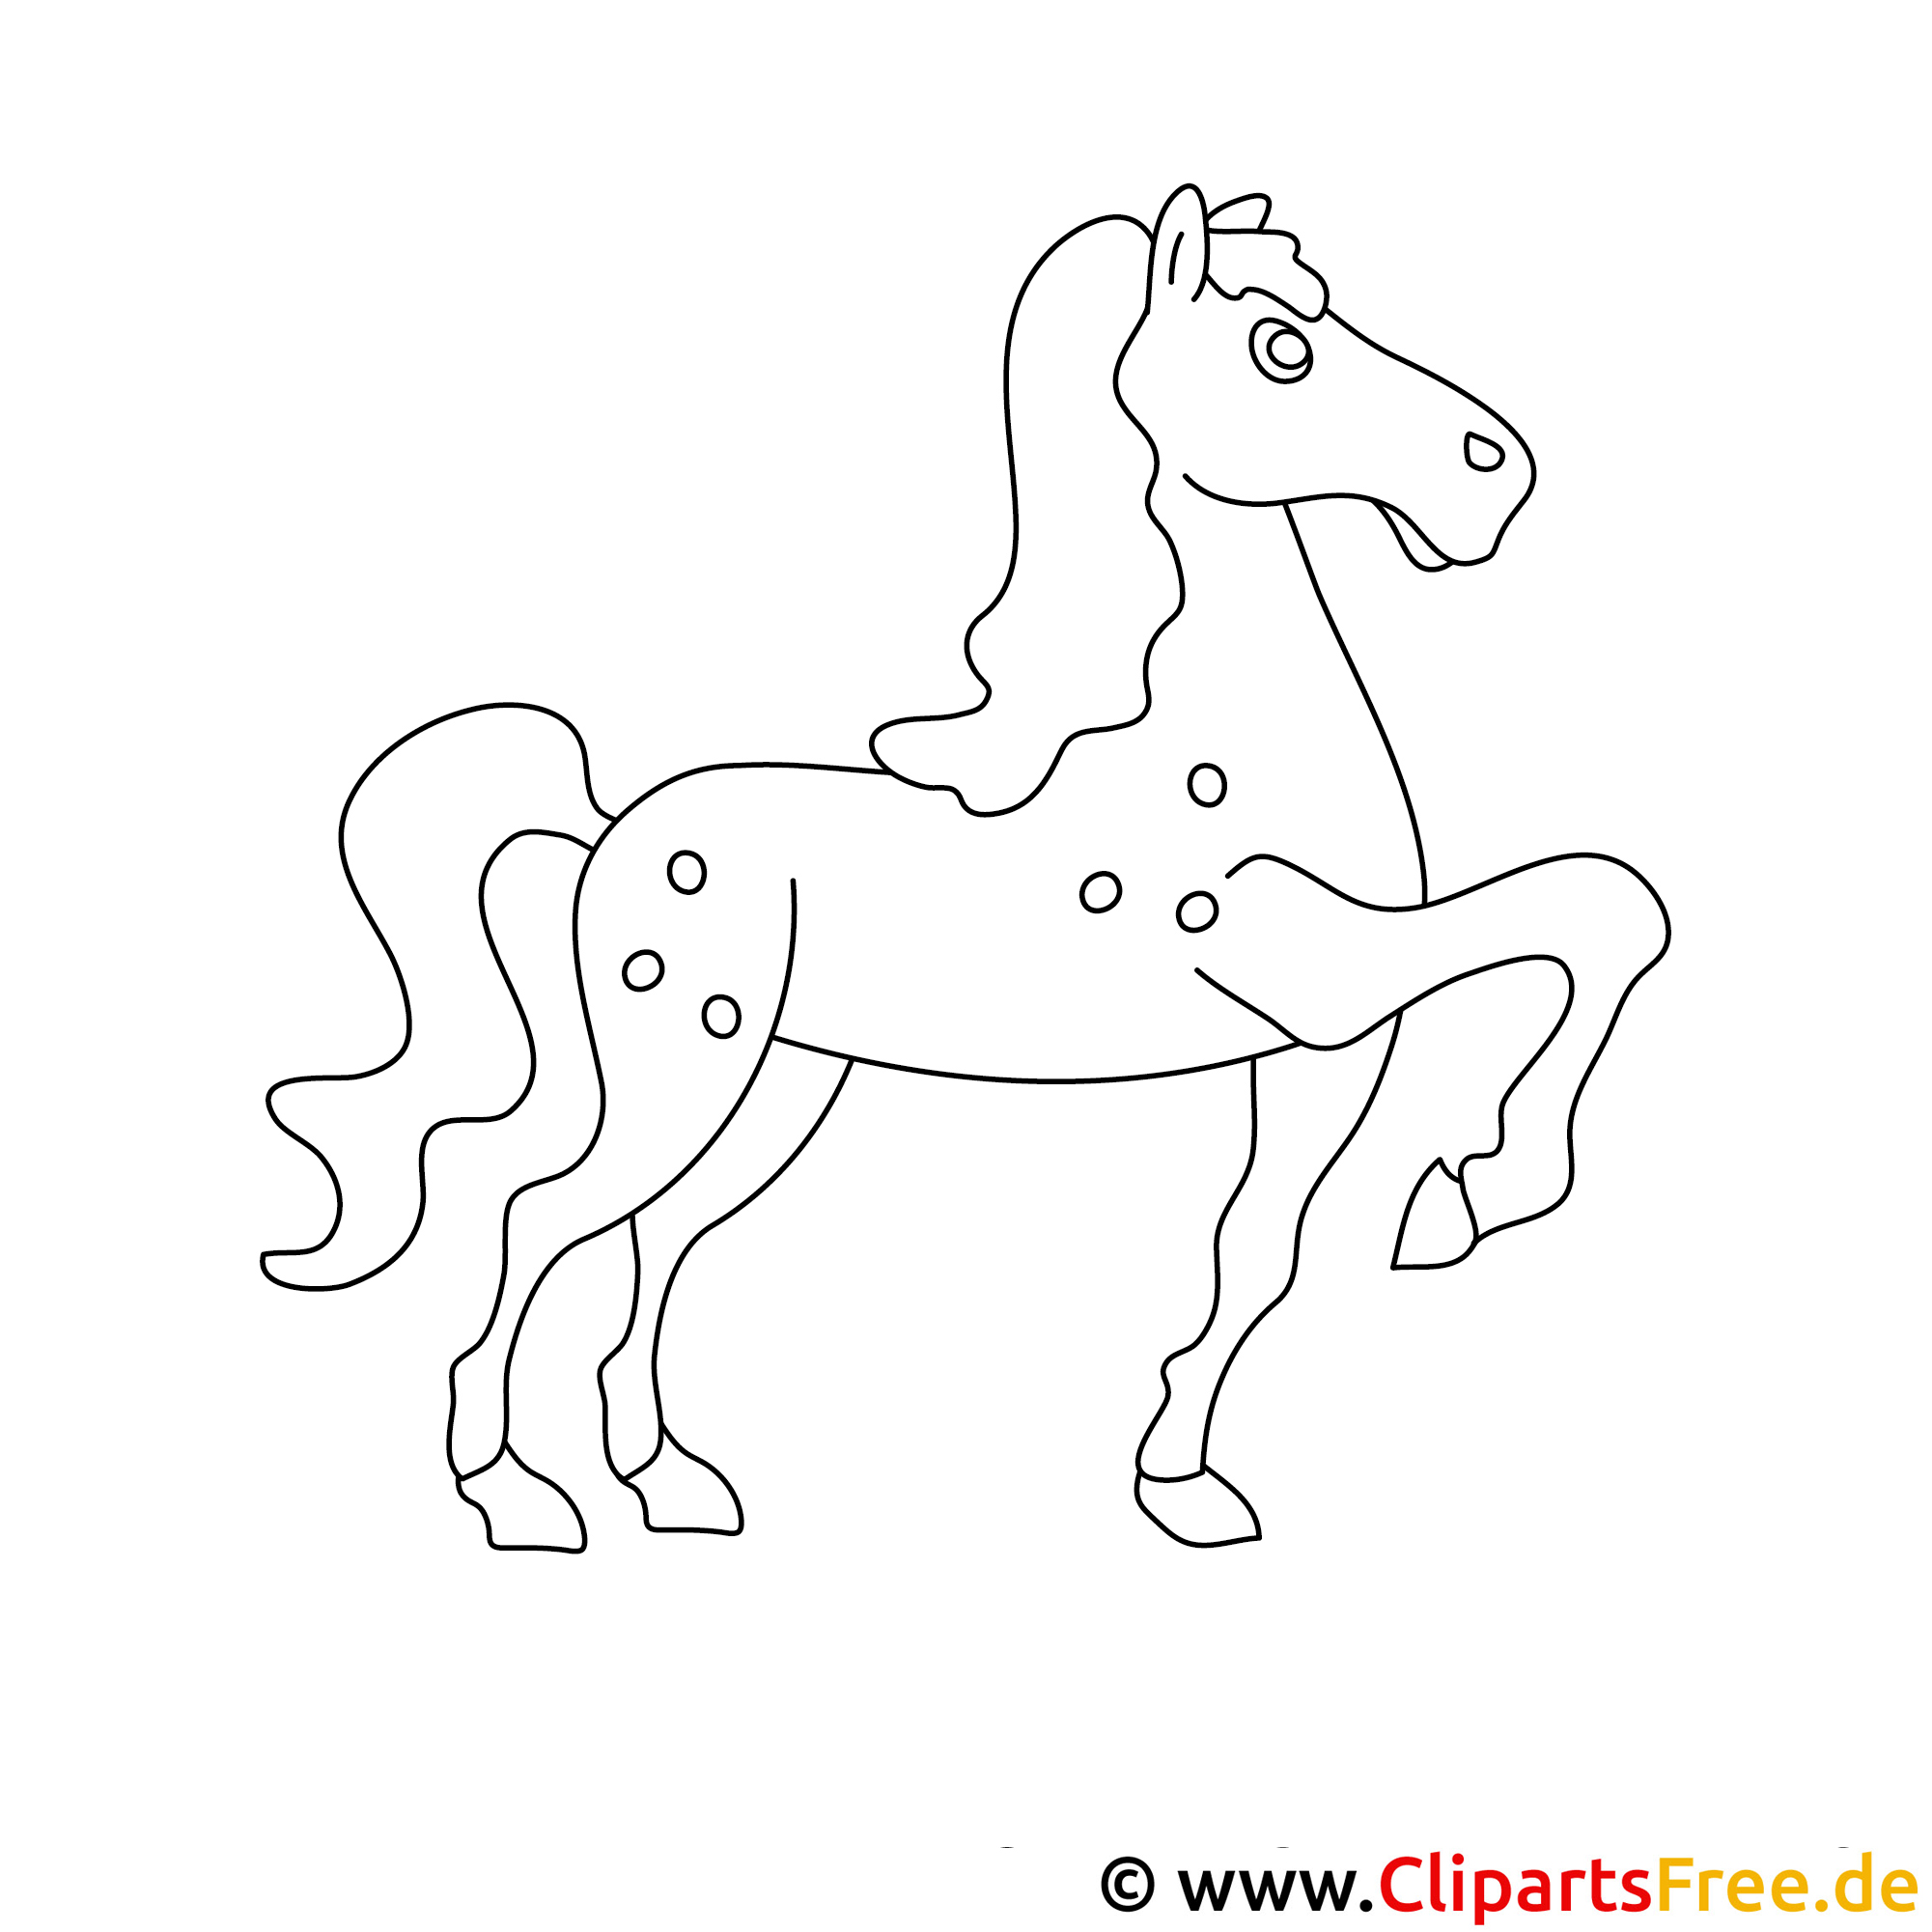 pferd cartoonbild, malvorlage, ausmalbild kostenlos